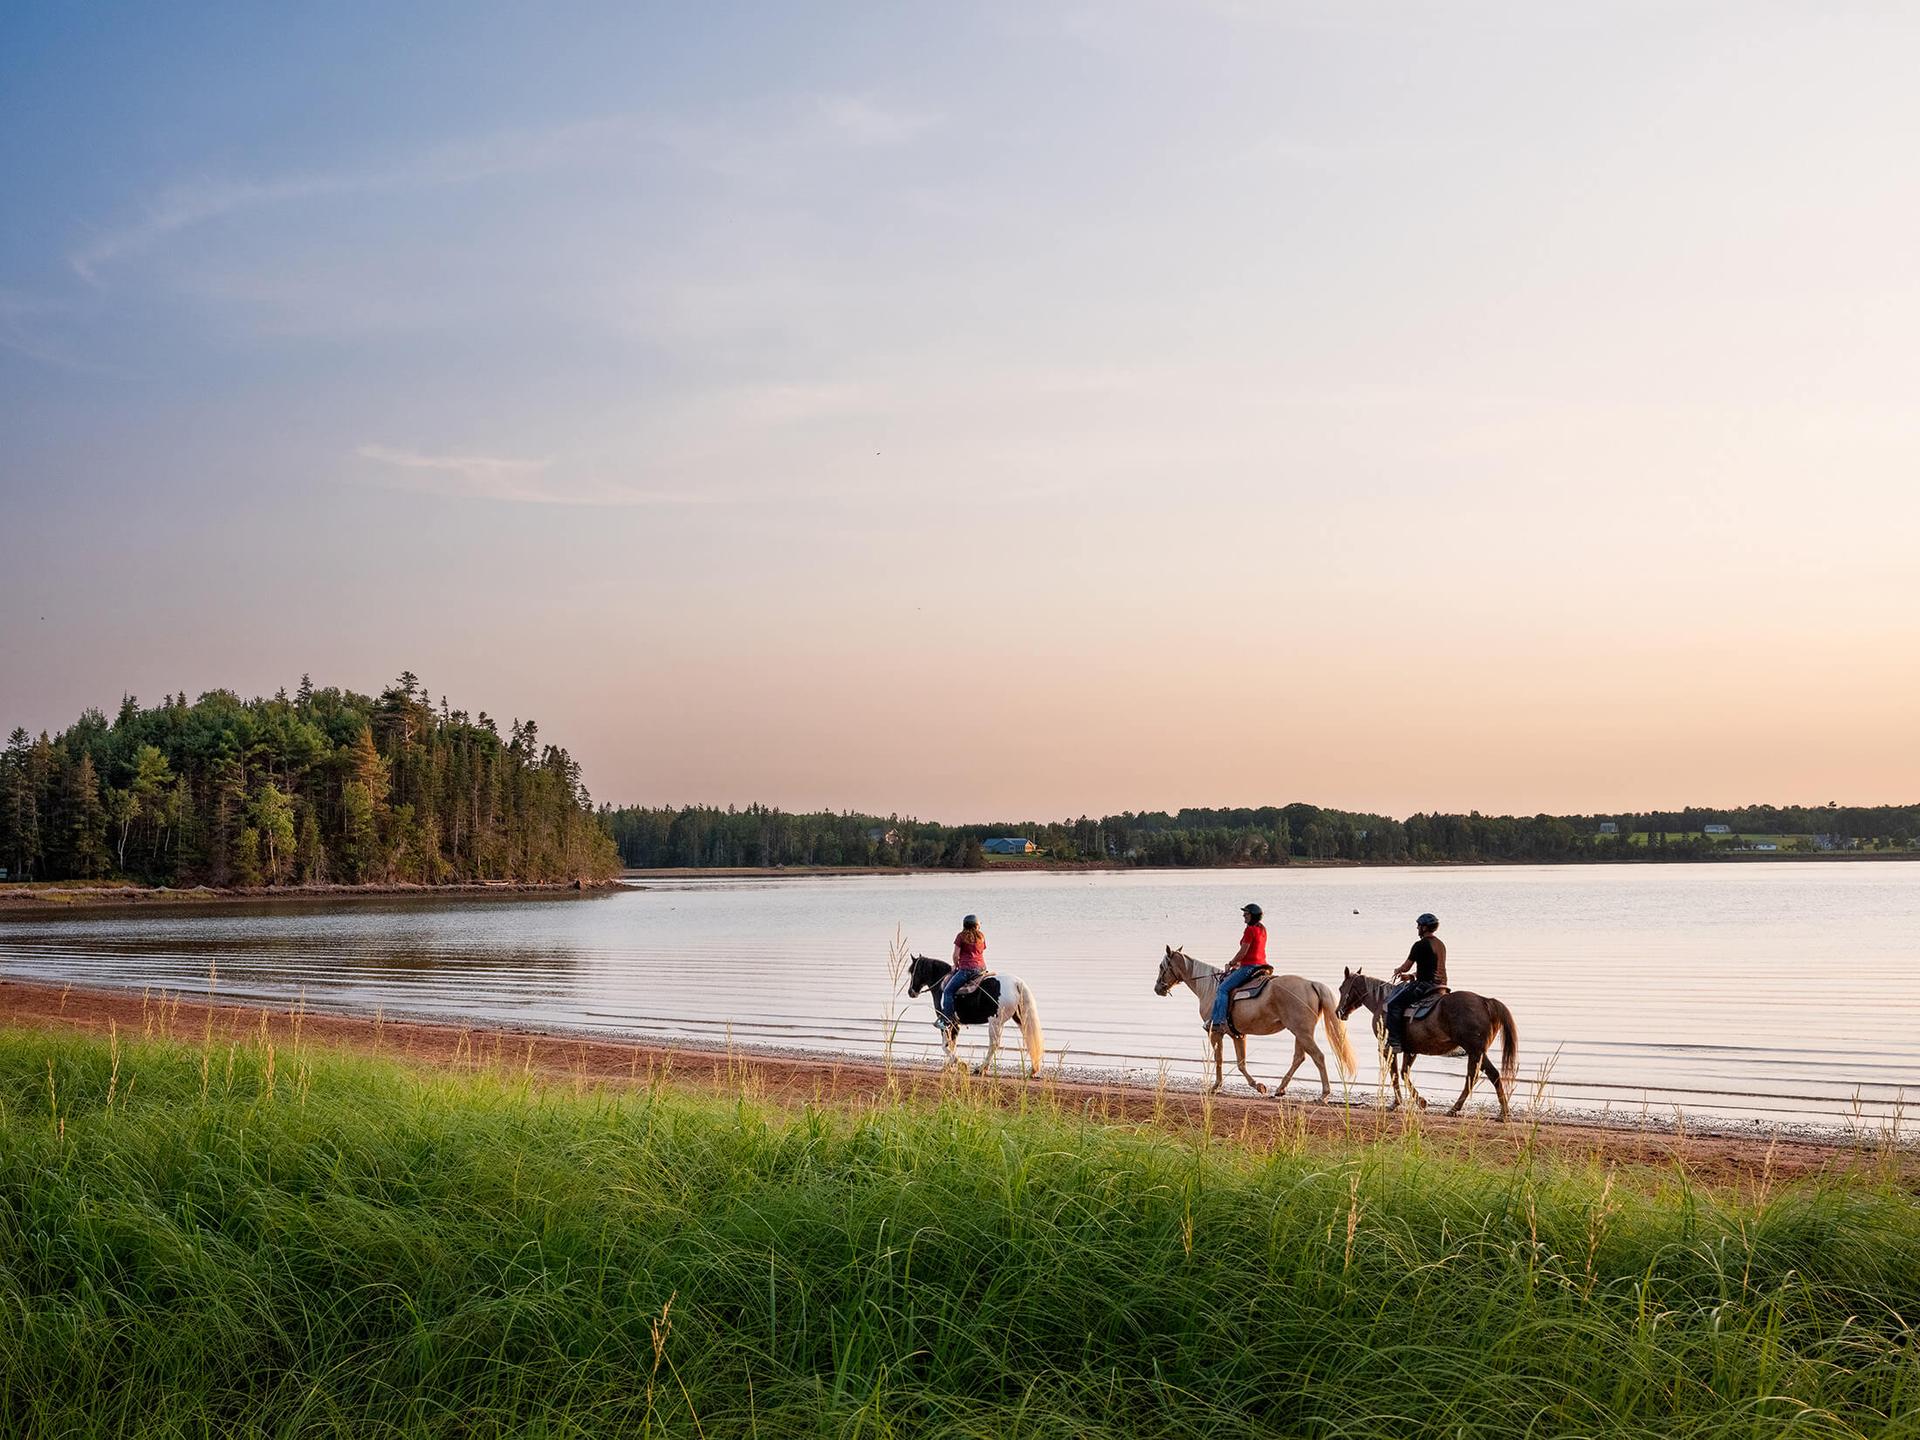 Three people riding horses on a PEI beach at dusk